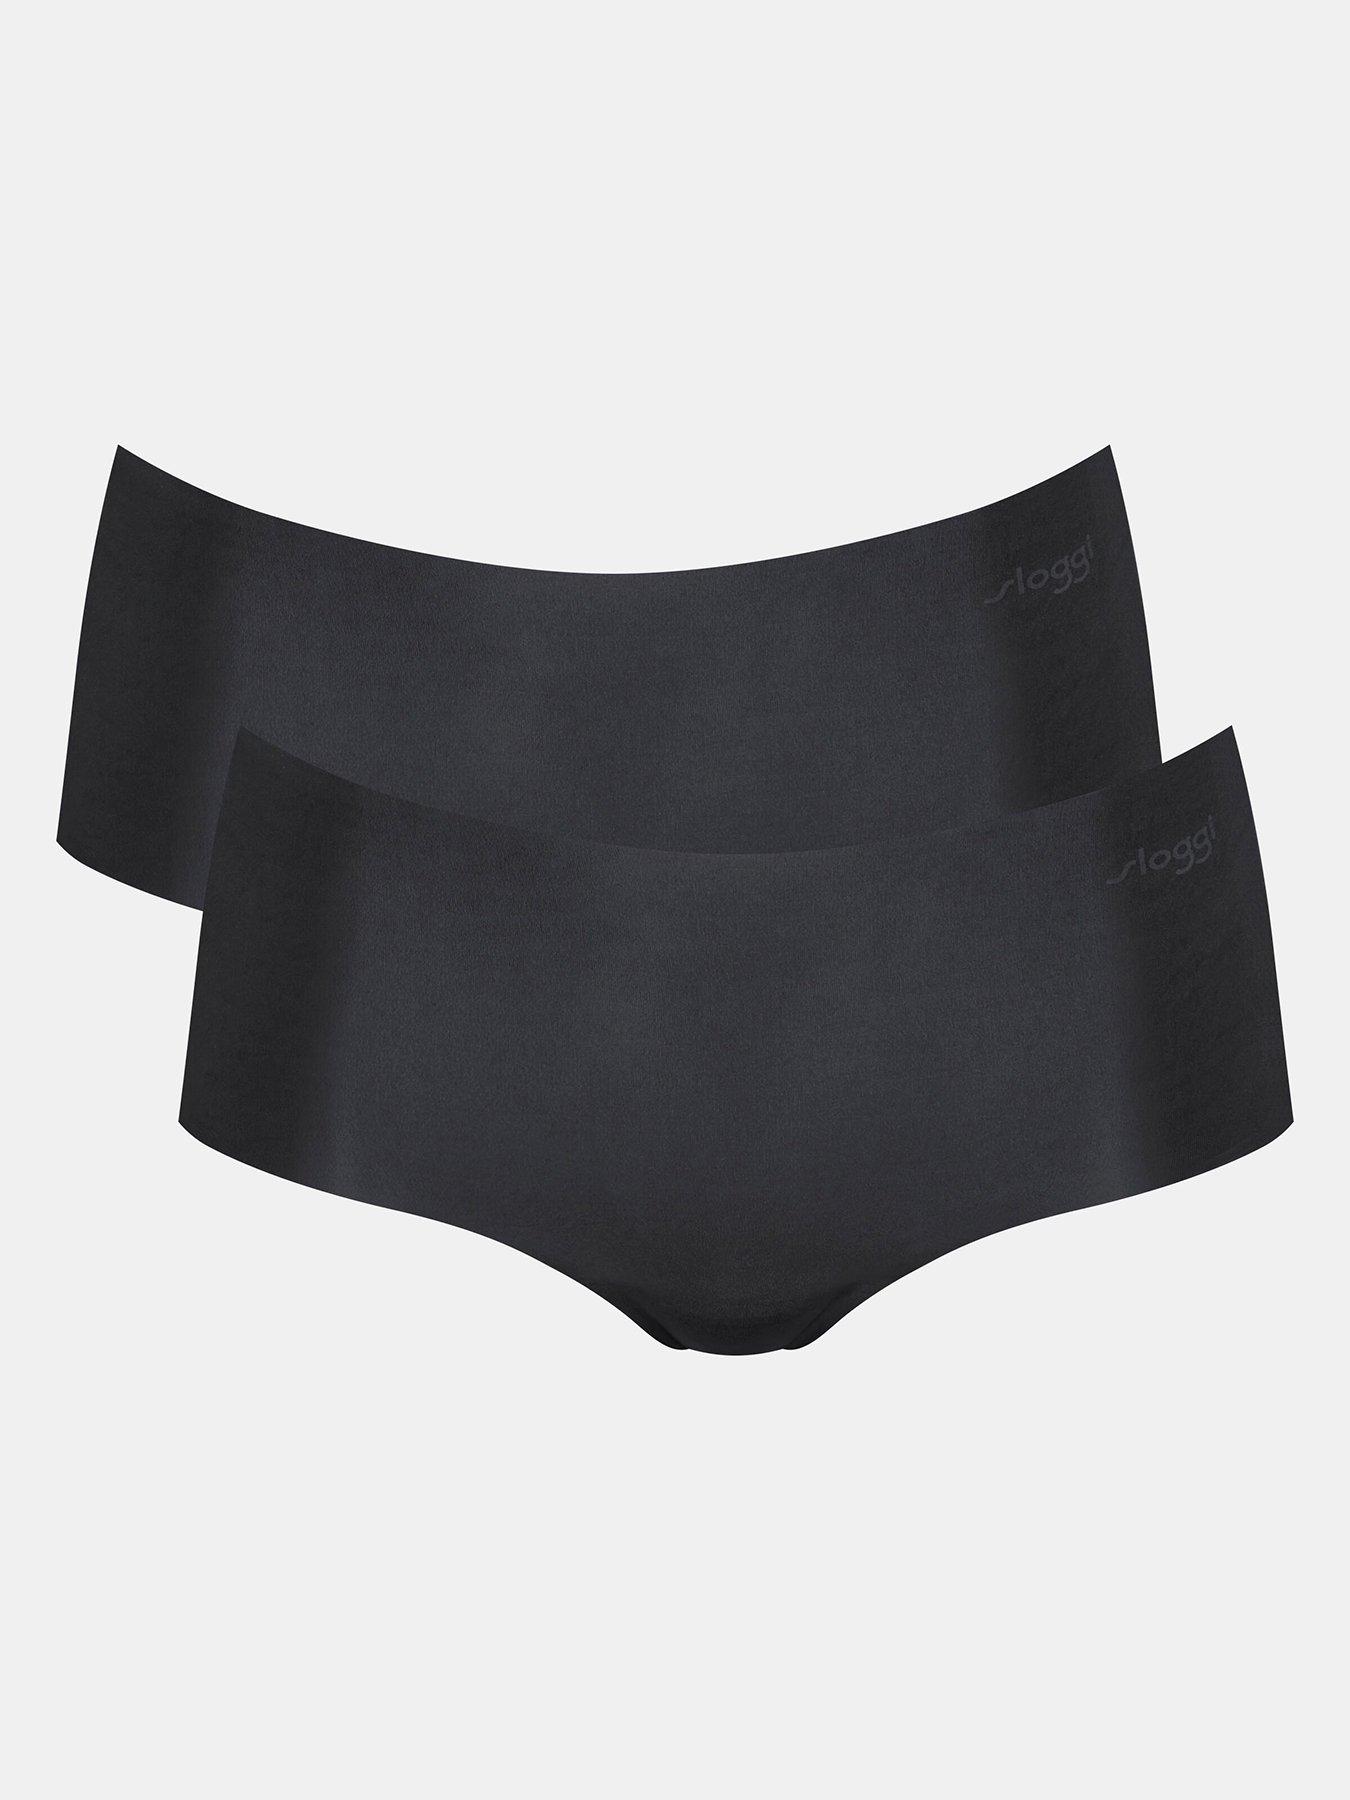 Sloggi Womens Zero Feel High Waisted Seamfree Cotton Underwear or Panties  Basic Maxi Briefs (Skin, M, 3 Pack) 